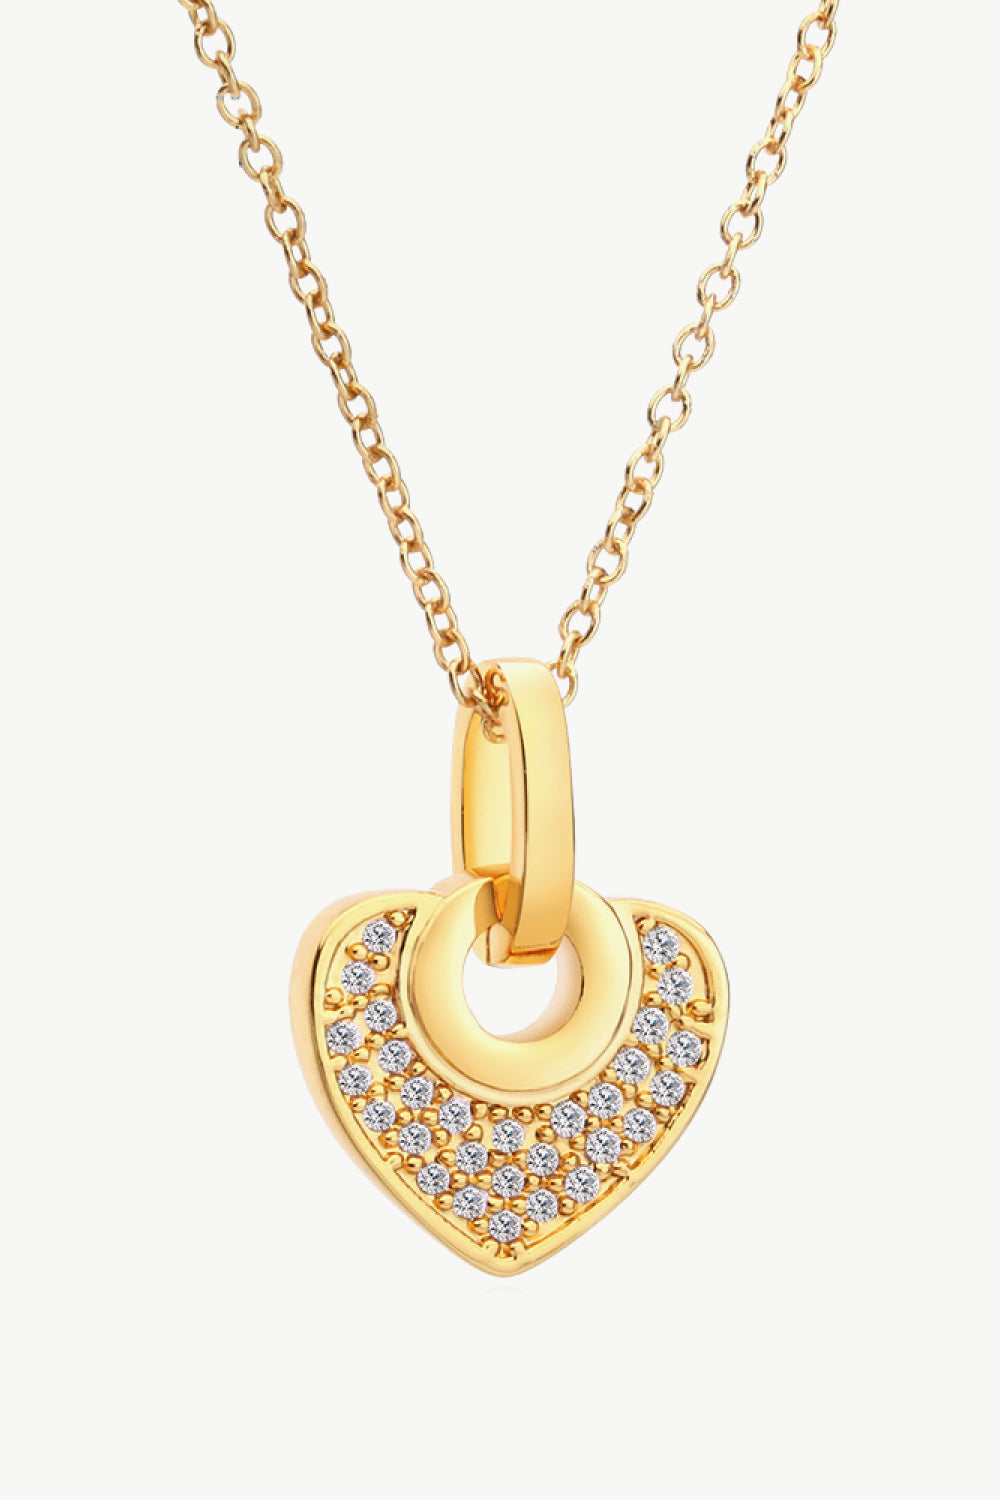 Crystal Heart Pendant Necklace - Tophatter Deals